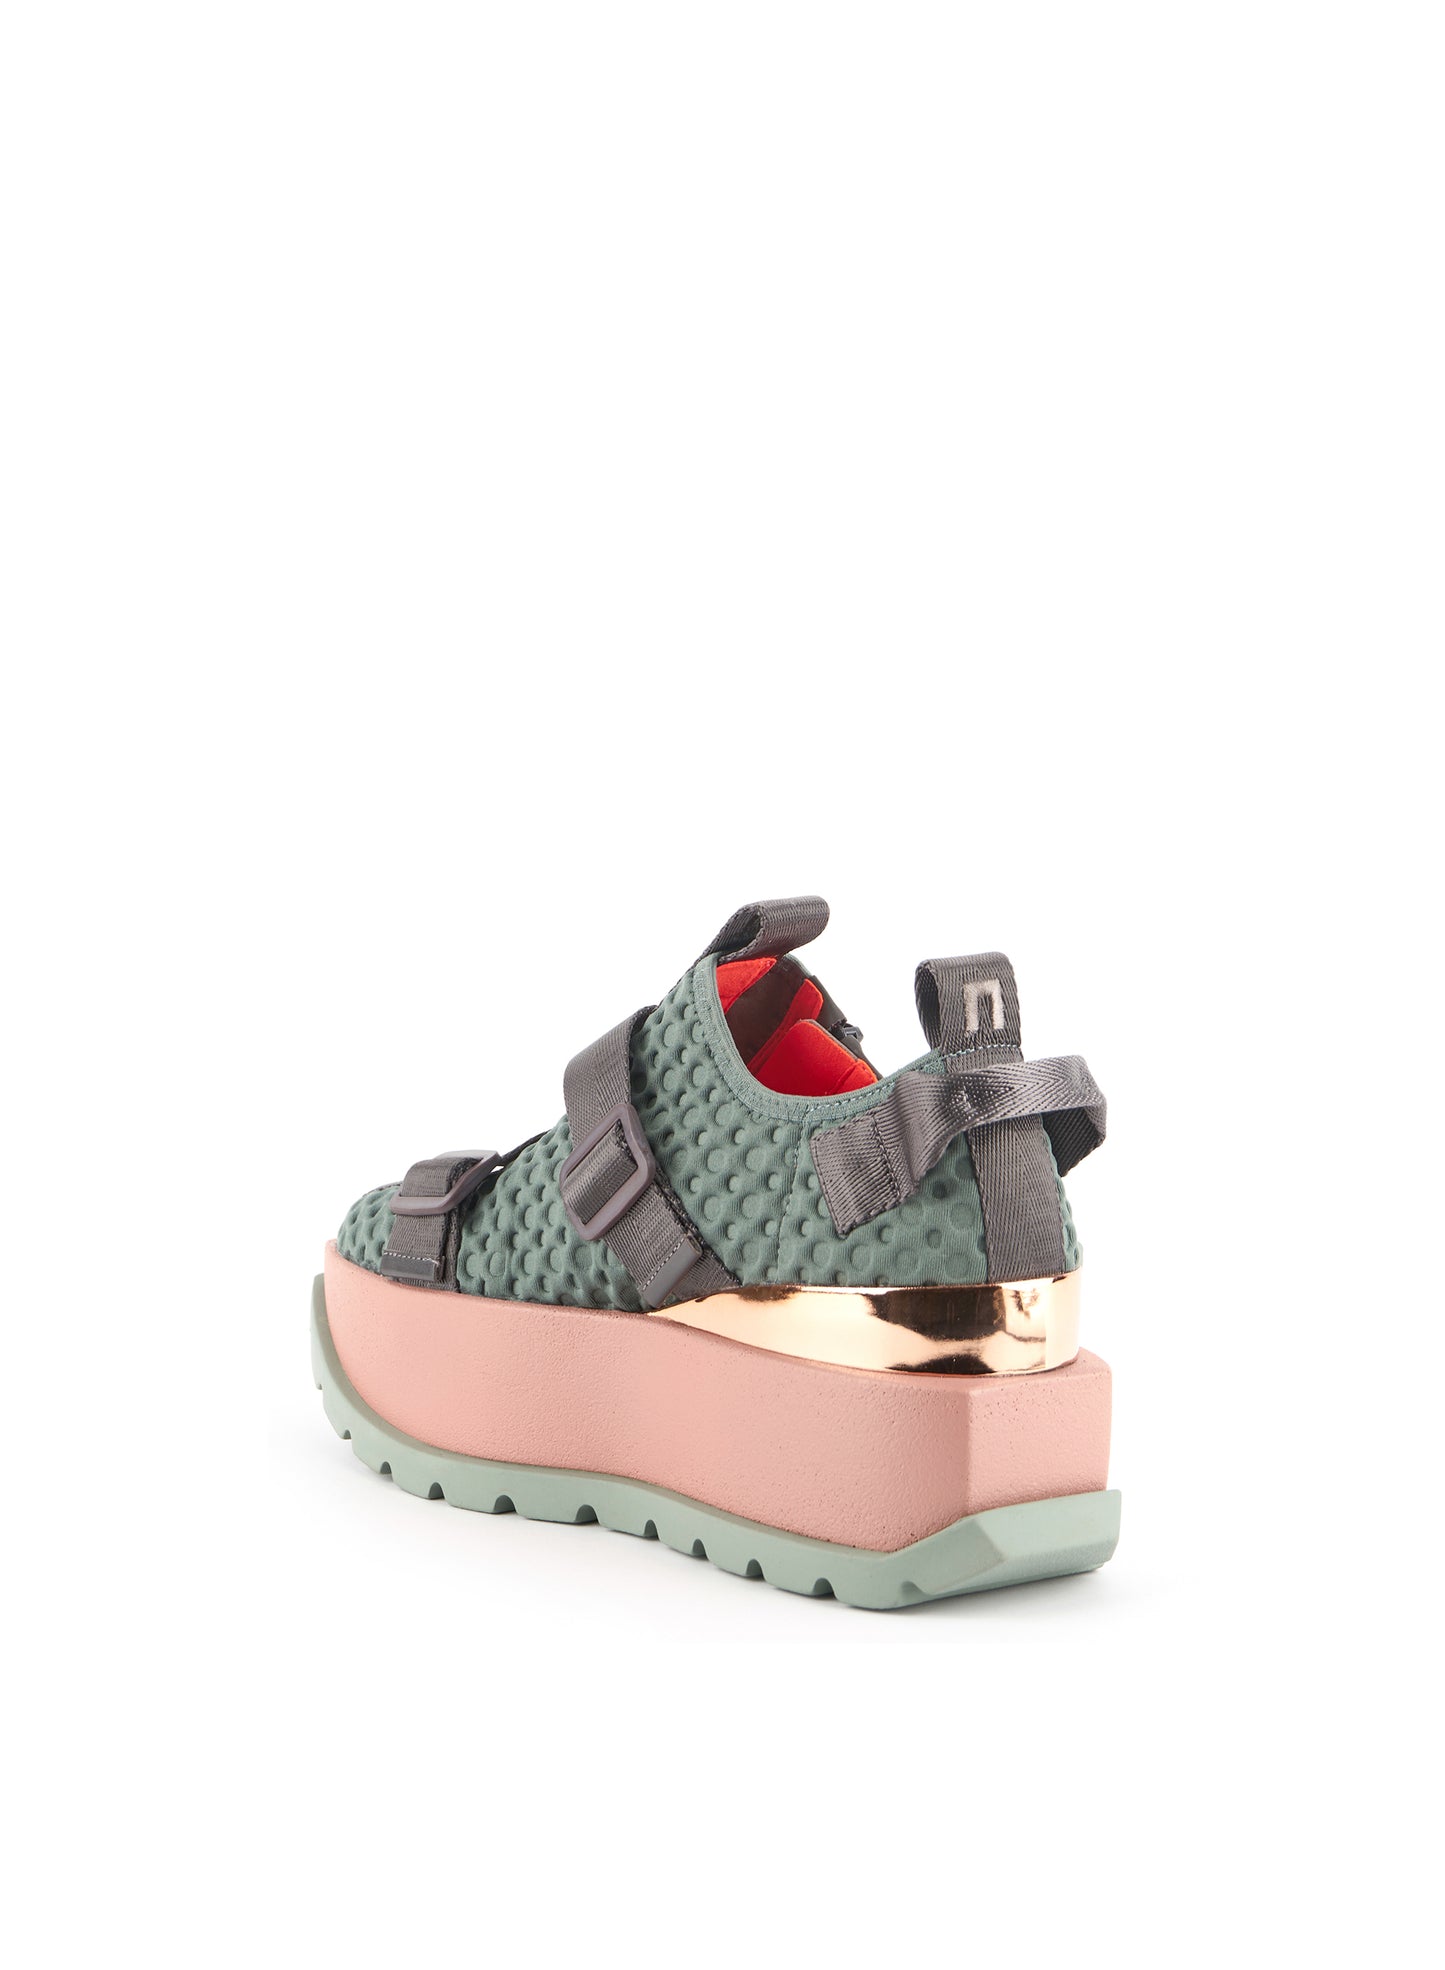 UNITED NUDE | أحذية رياضية للنساء | ROKO Y II SAGE | الرمادي والأخضر والوردي